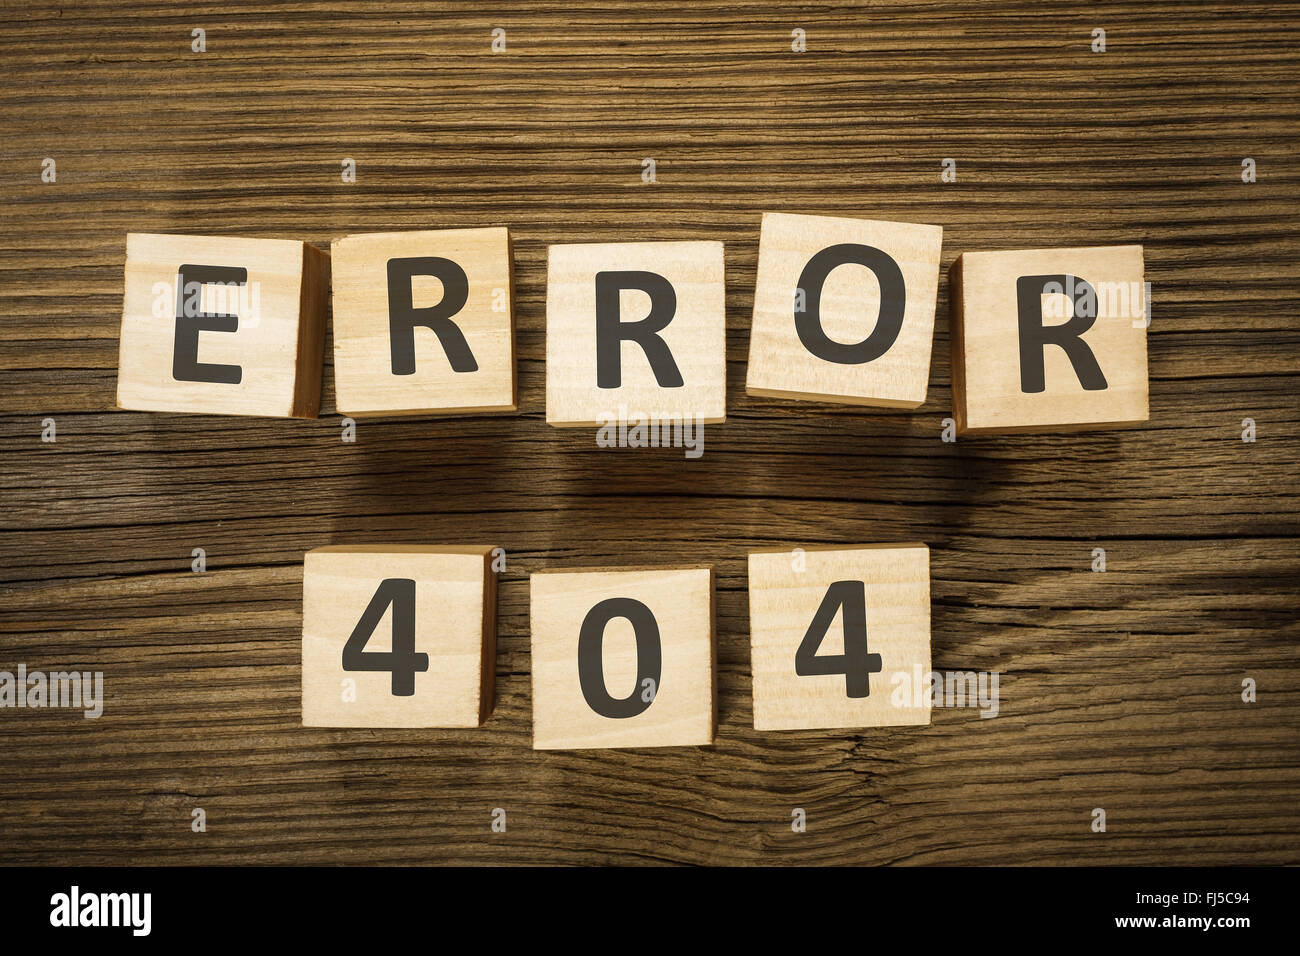 Inscription 'error 404' made from wooden blocks Stock Photo